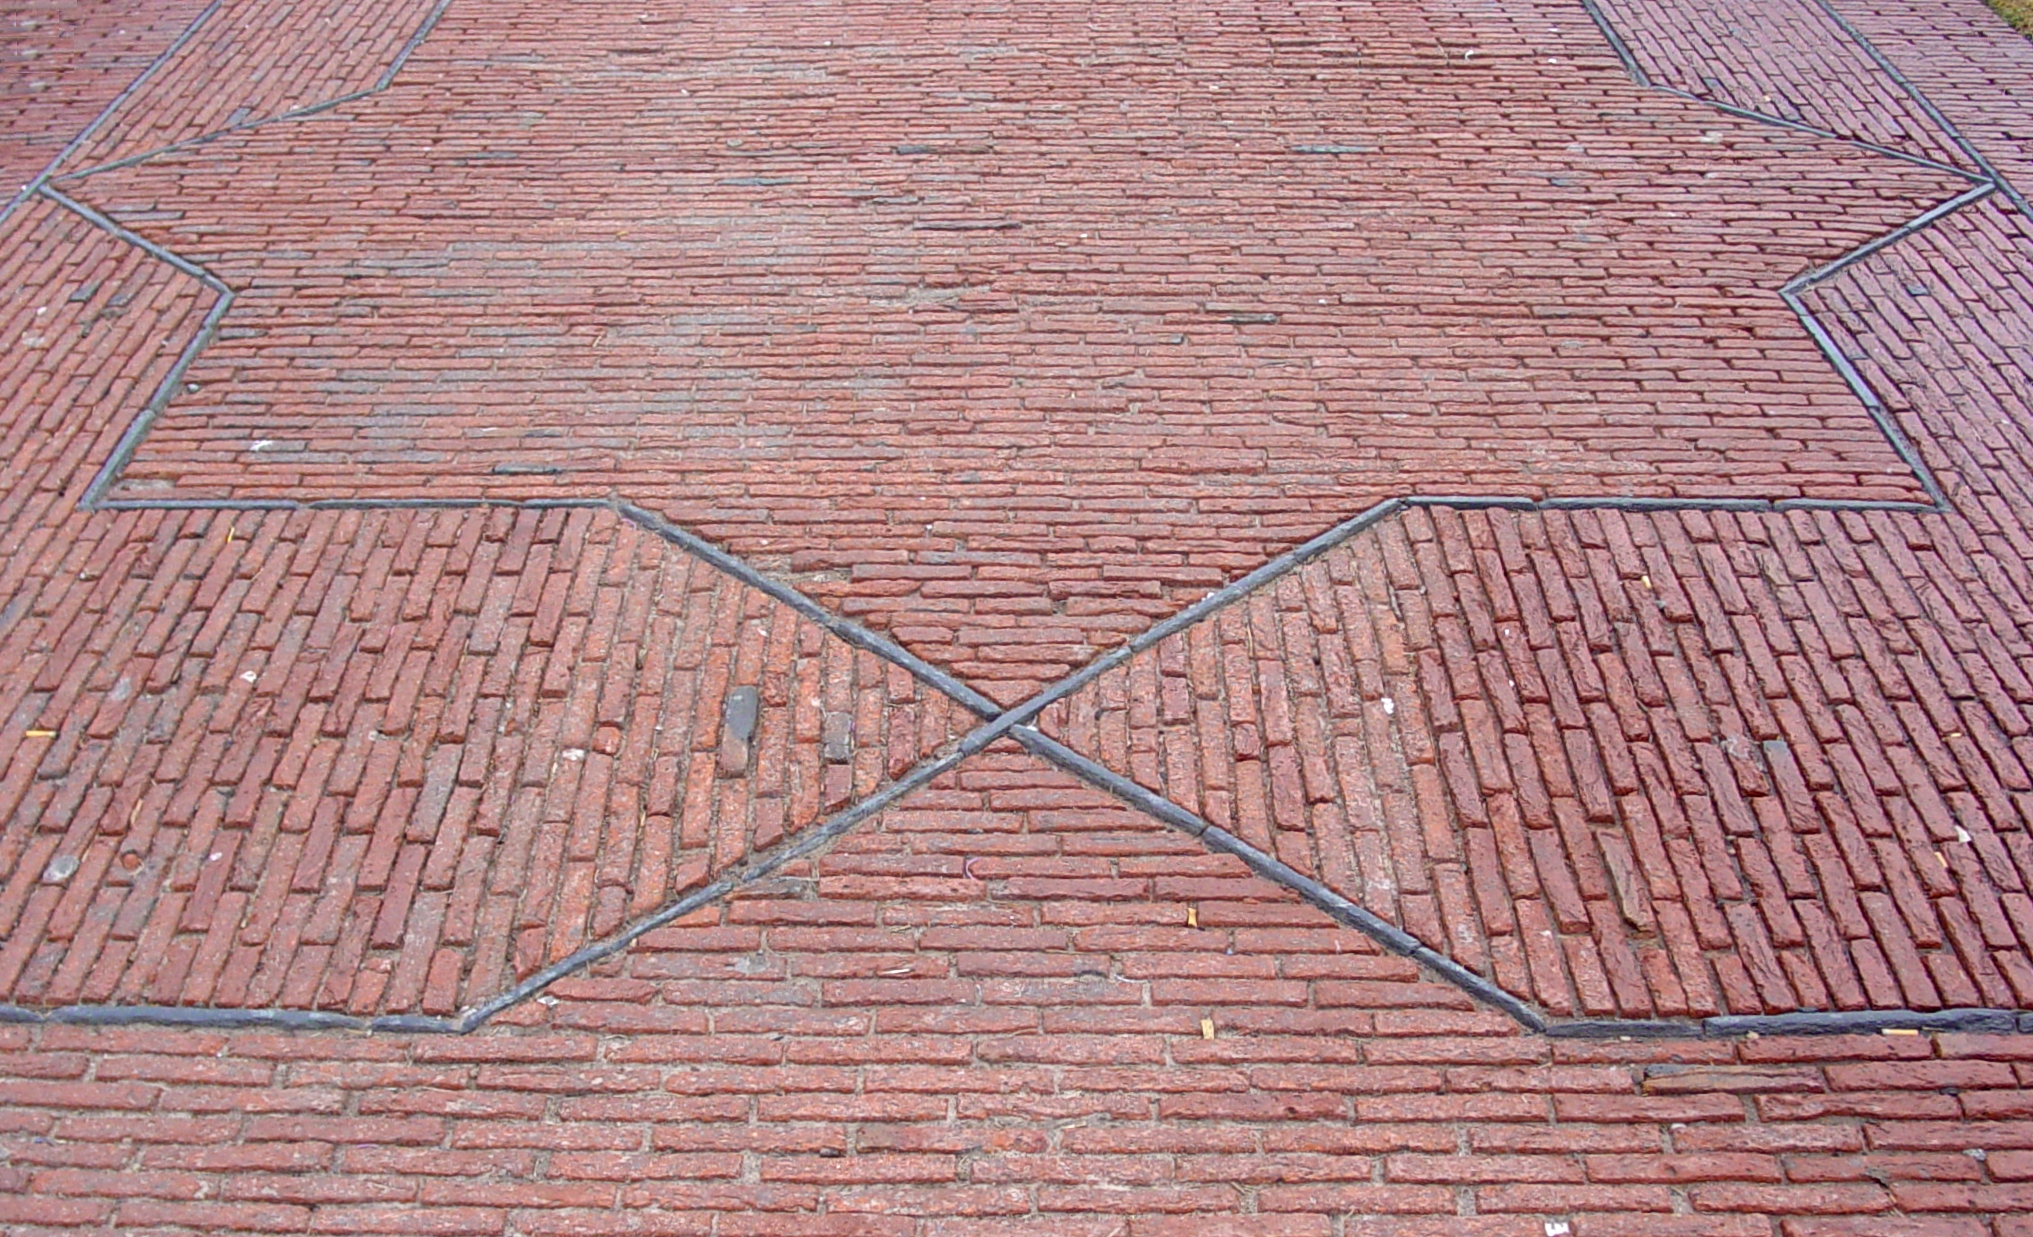 Brick pattern on pathway